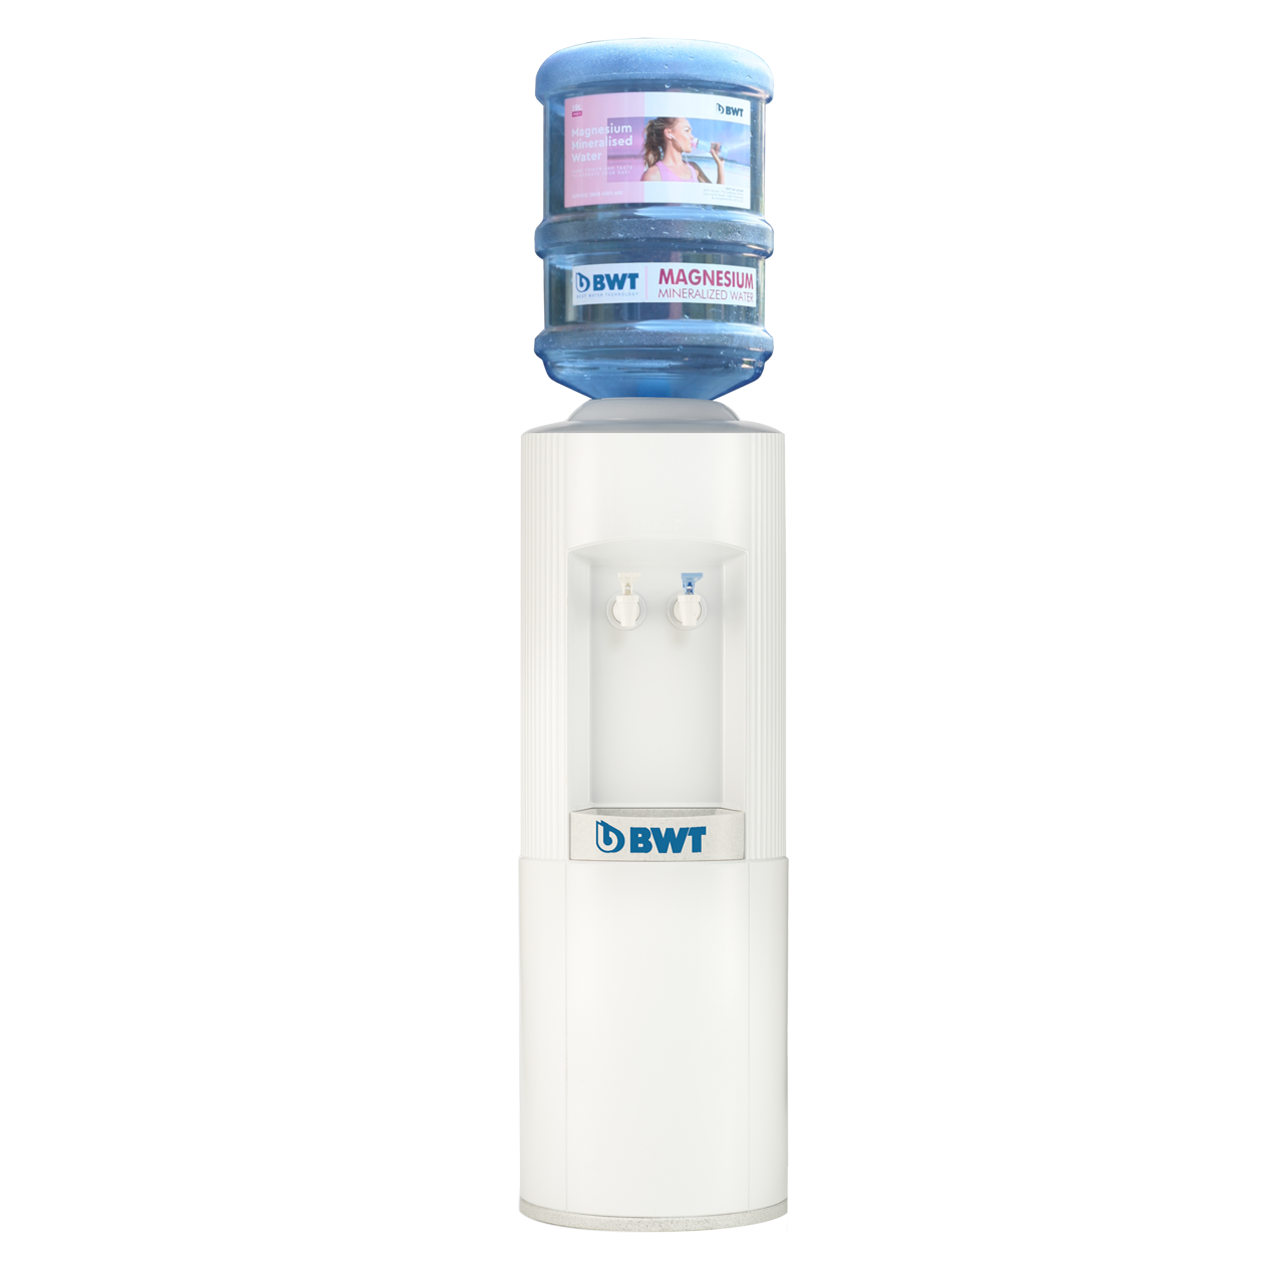 BWT water cooler